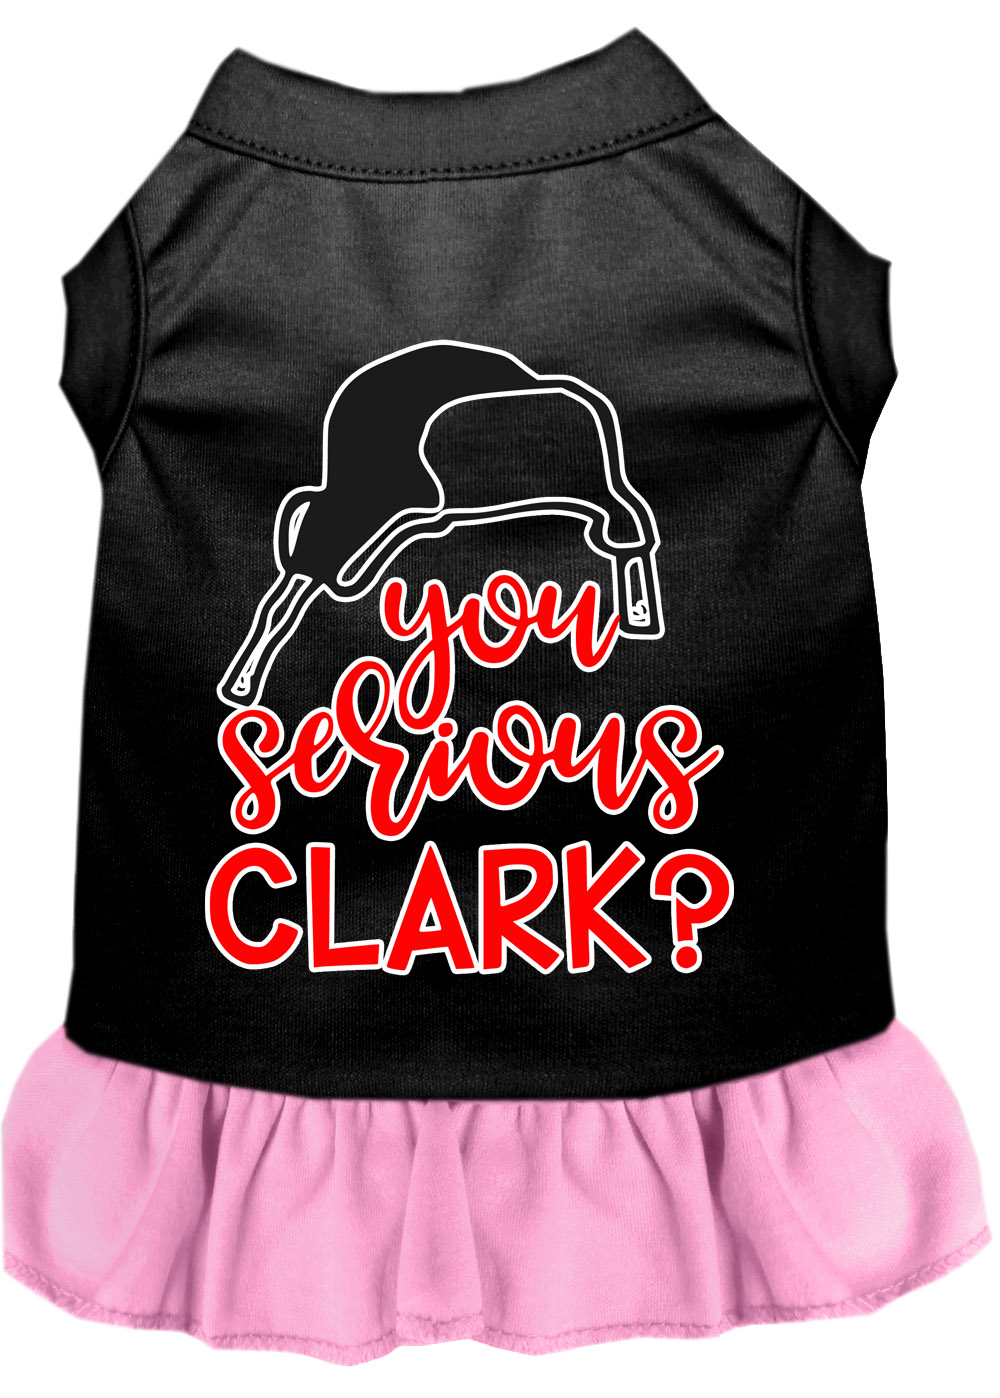 You Serious Clark? Screen Print Dog Dress Black with Light Pink Lg